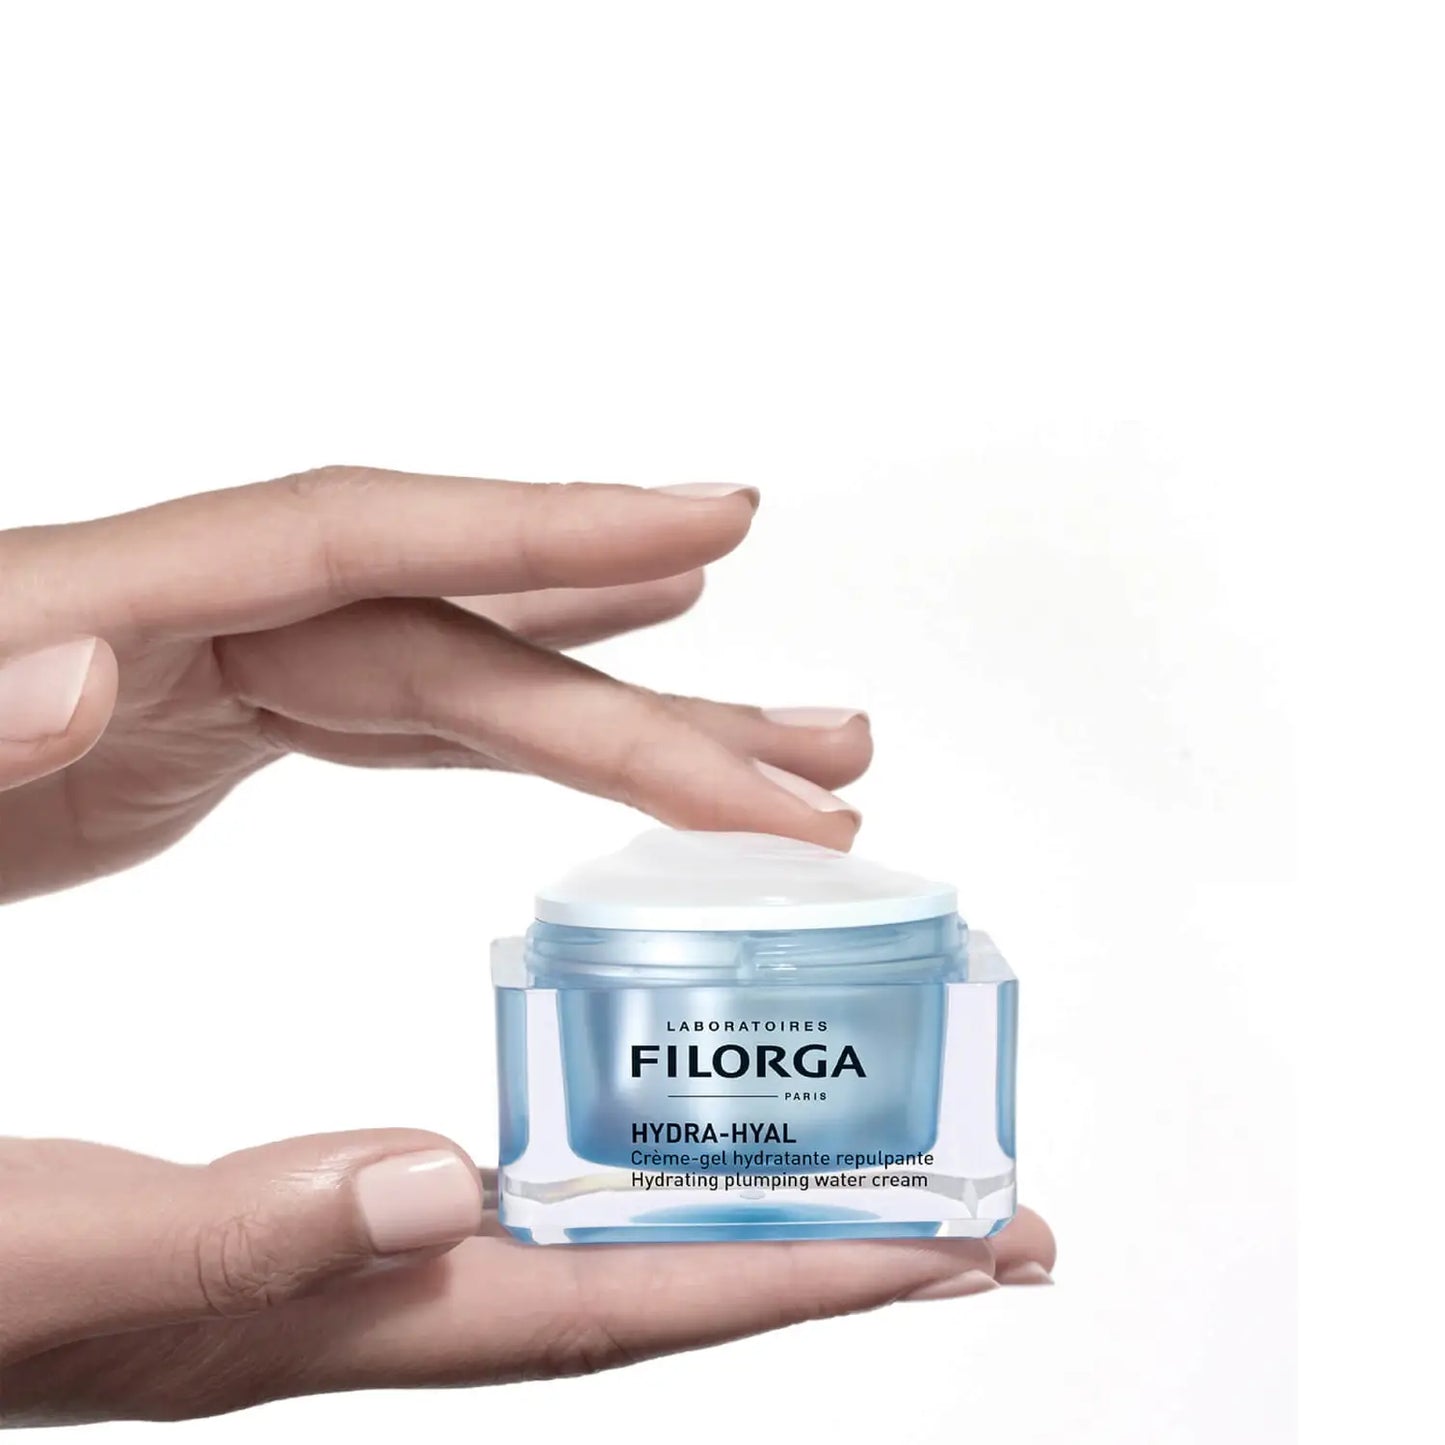 Hands holding FILORGA HYDRA-HYAL CREAM-GEL open jar